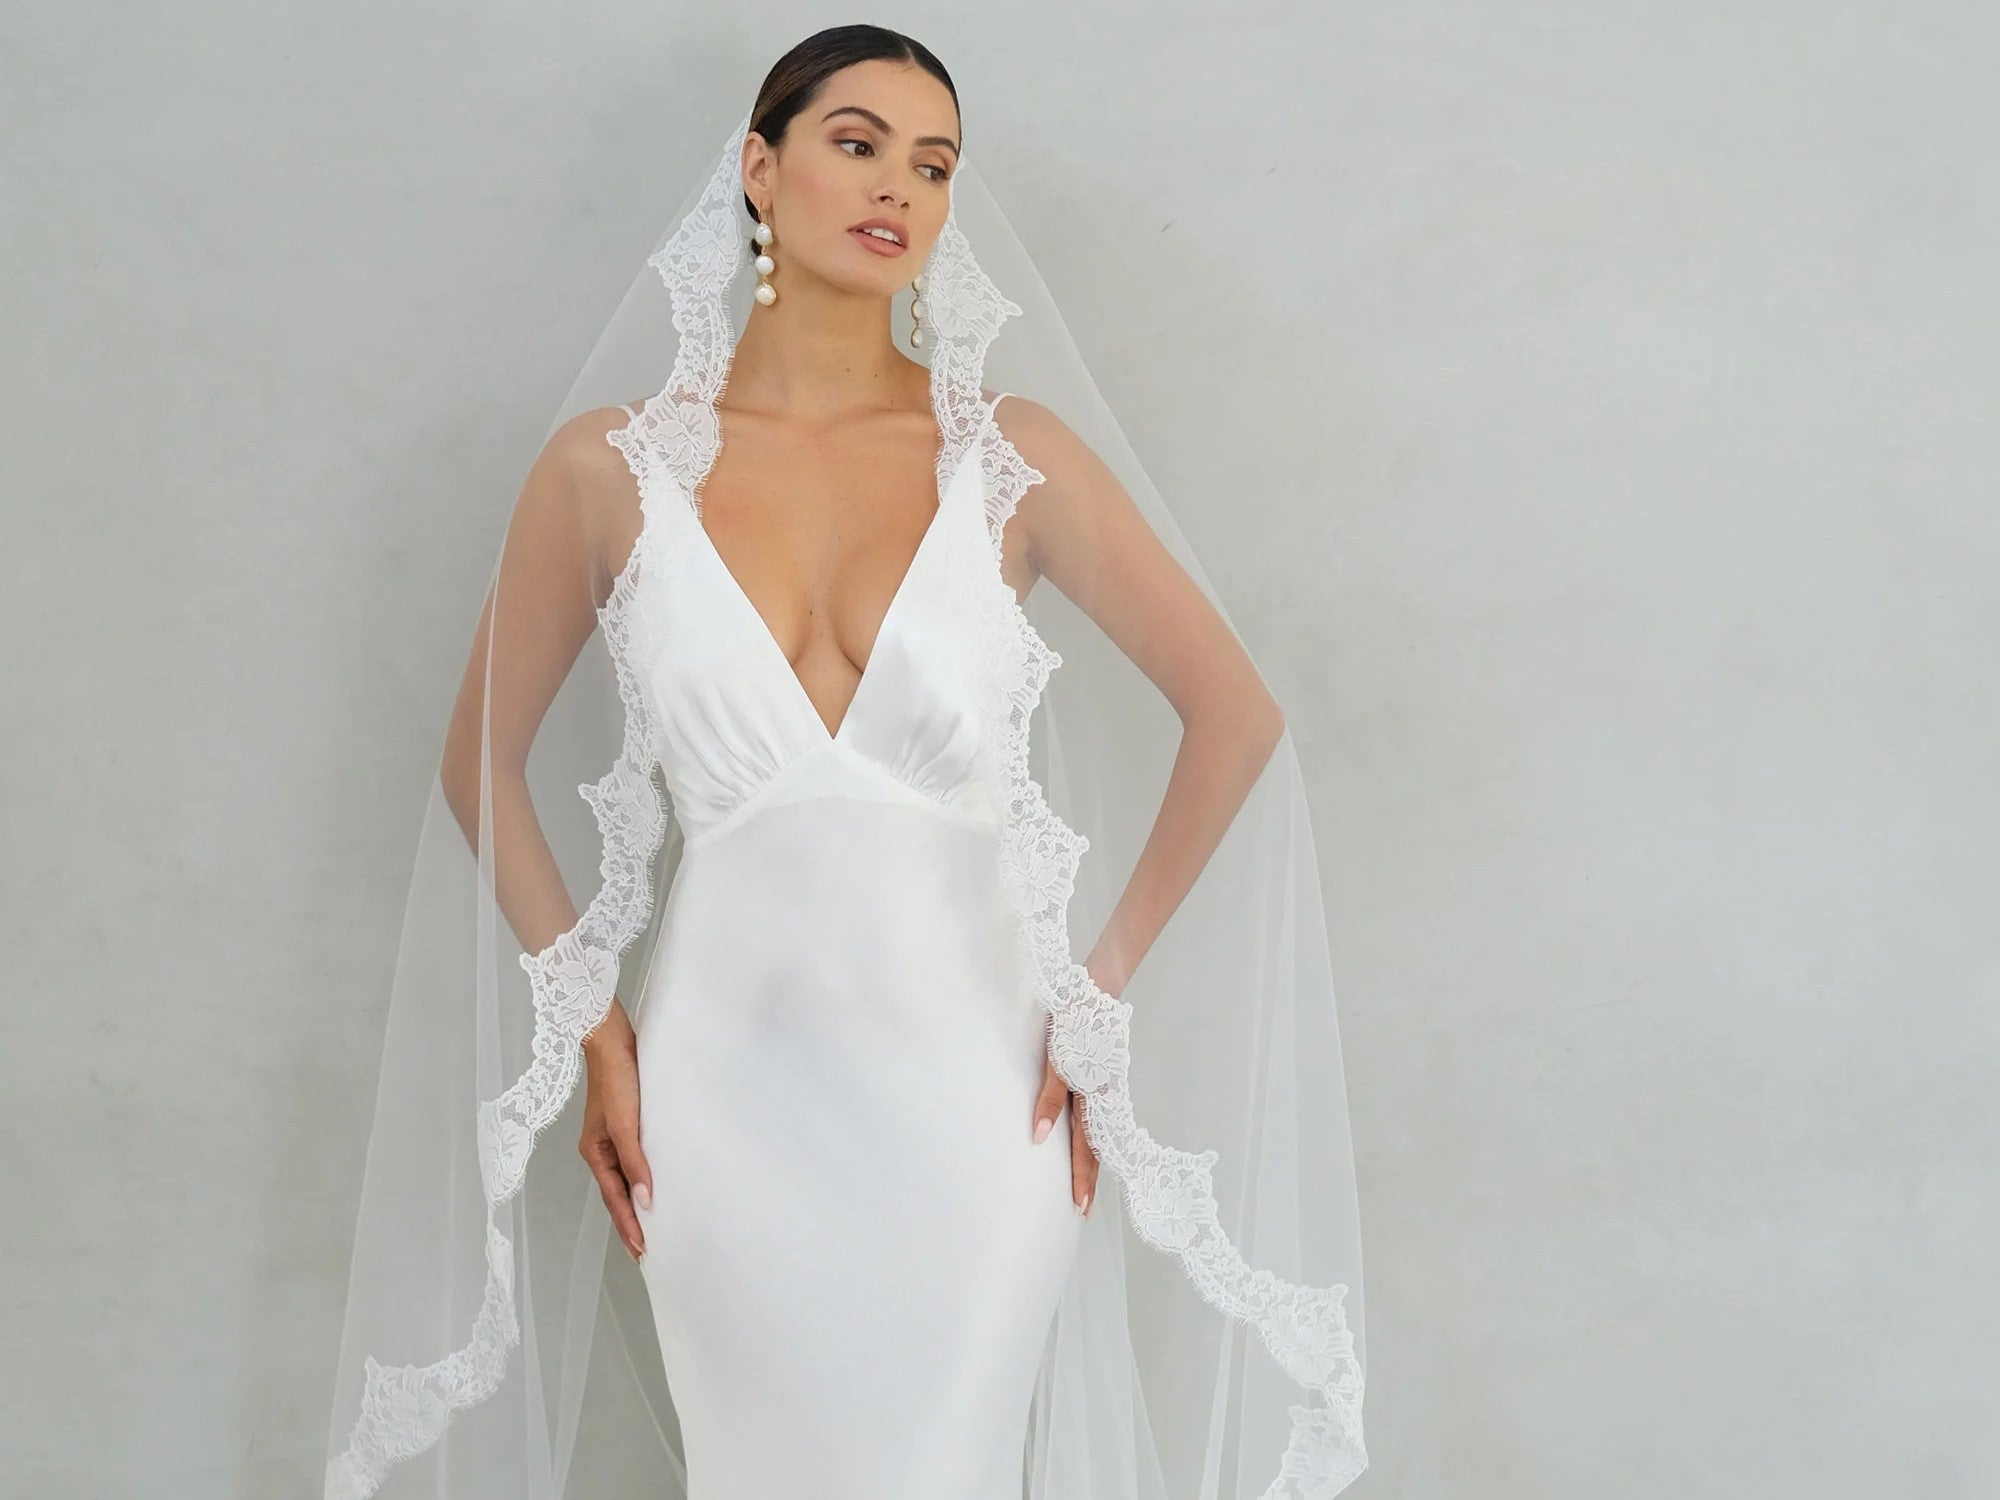 What Is A Mantilla Wedding Veil?